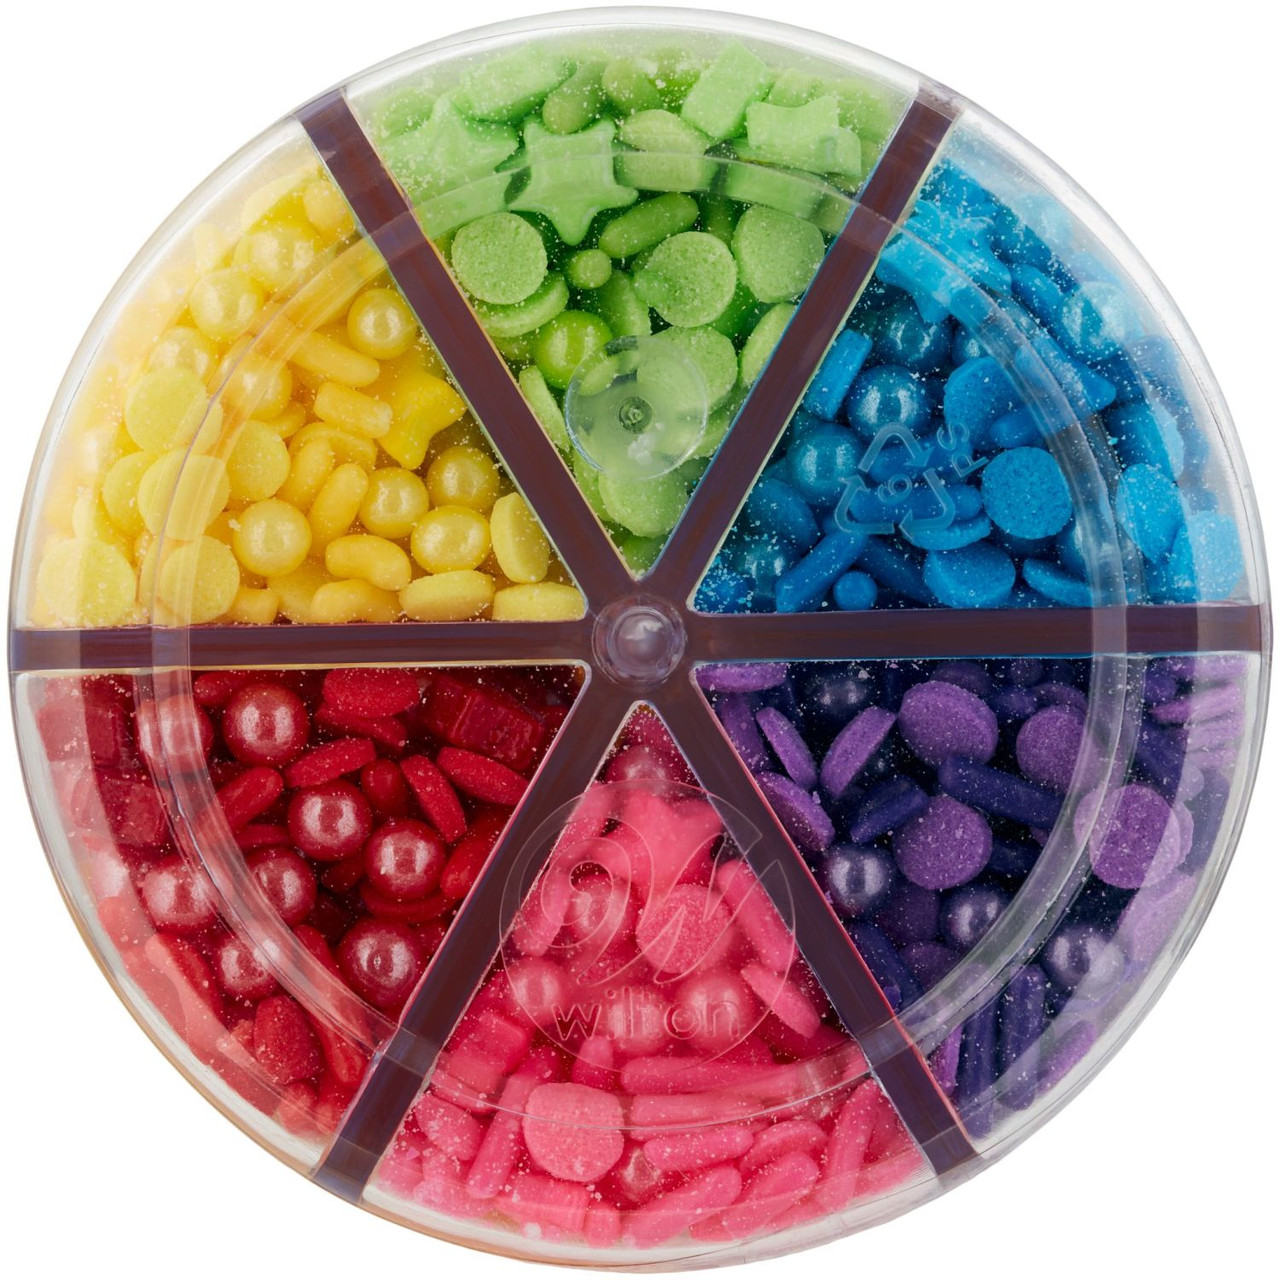 Wilton Rainbow Basics Sprinkles Mix with Turning Lid: 5.92-Ounce Bottle